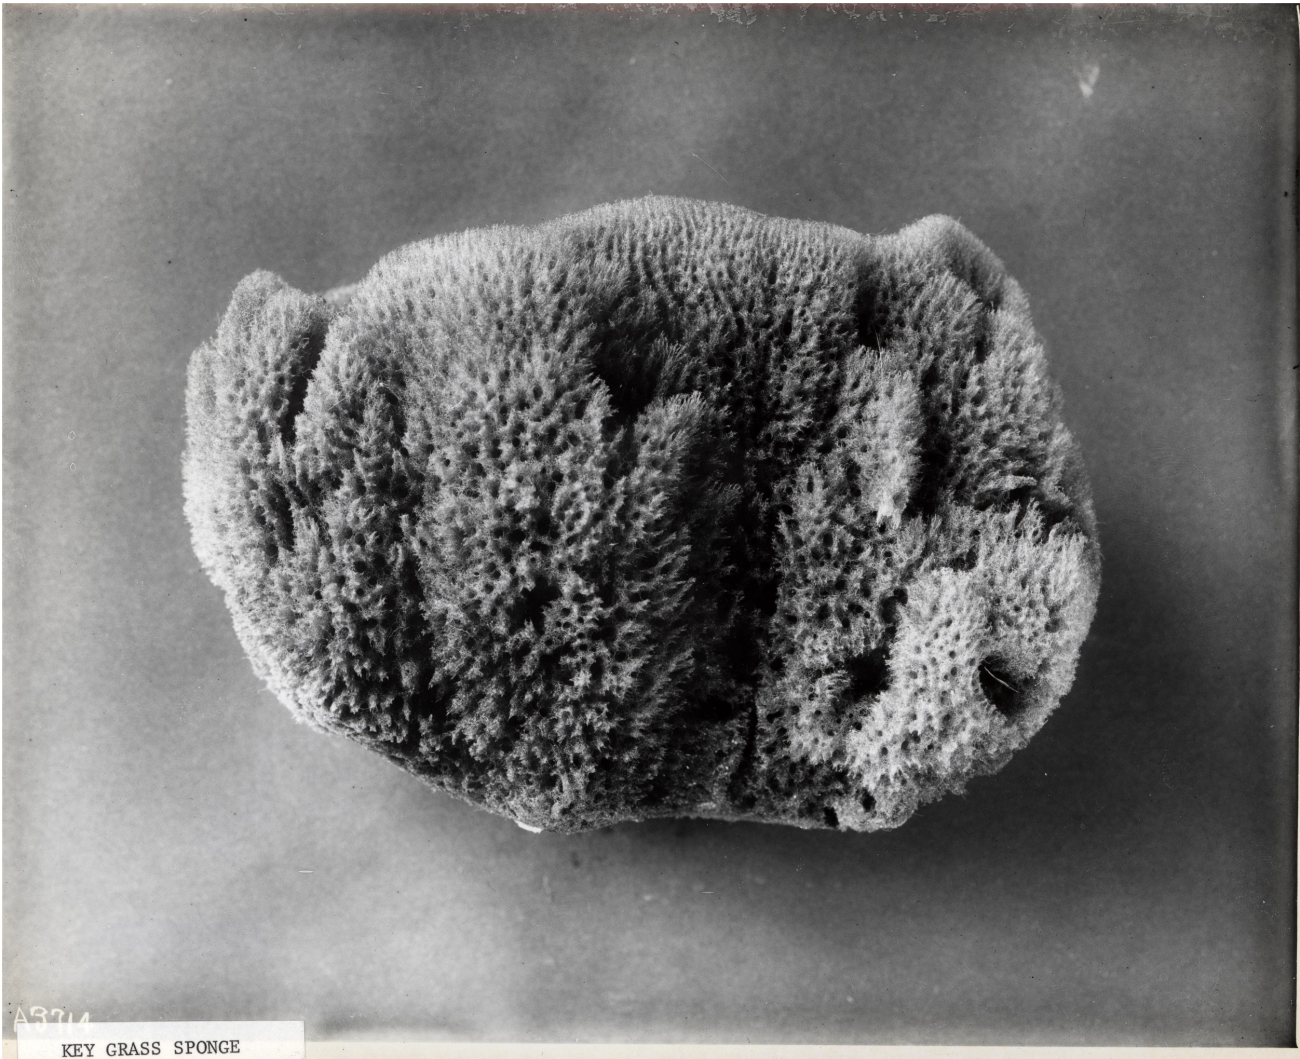 Key grass sponge - specimen from Florida